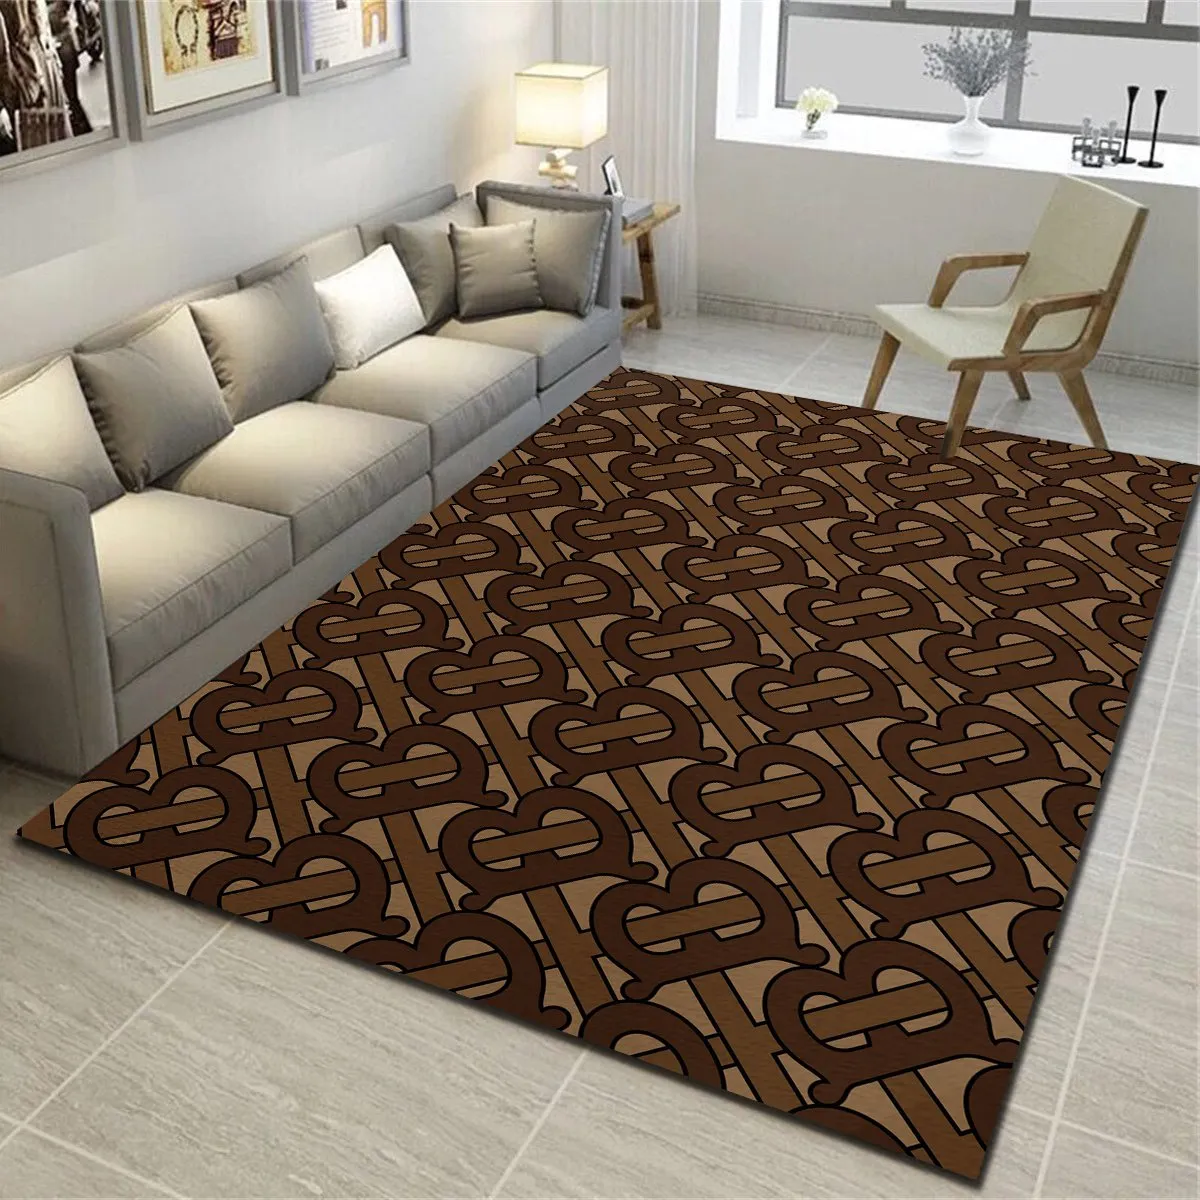 Burberry Brown Rectangle Rug Home Decor Luxury Door Mat Fashion Brand Area Carpet